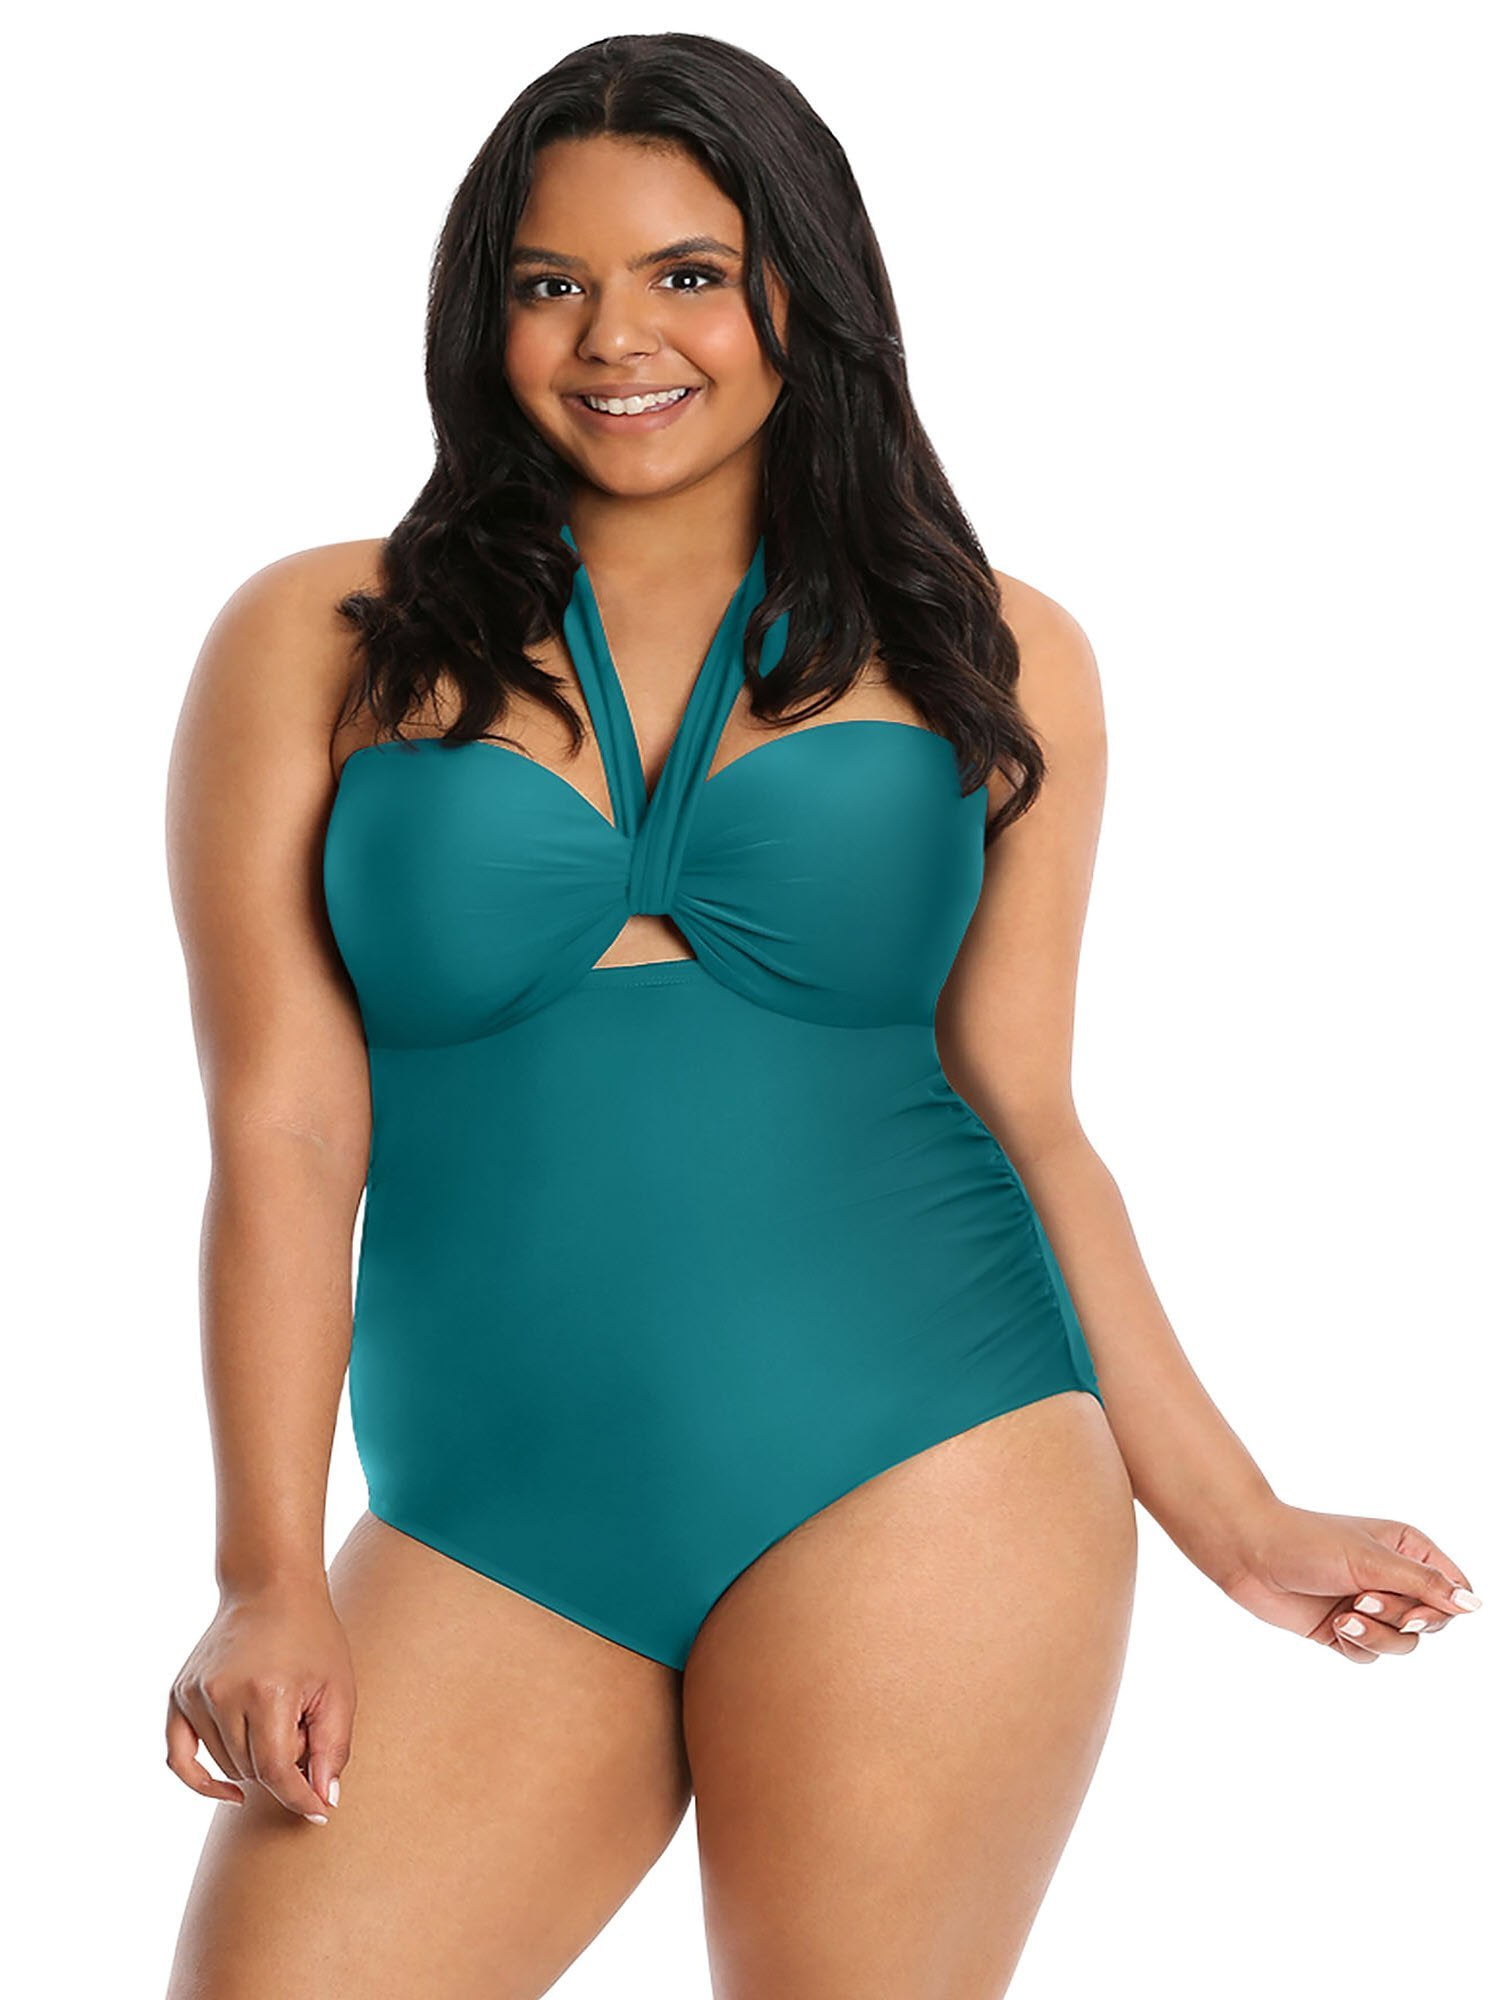 lighed Sætte blast Lysa Women's Plus Size Heather Halter One Piece Swimsuit 0X 1X 2X 3X -  Walmart.com